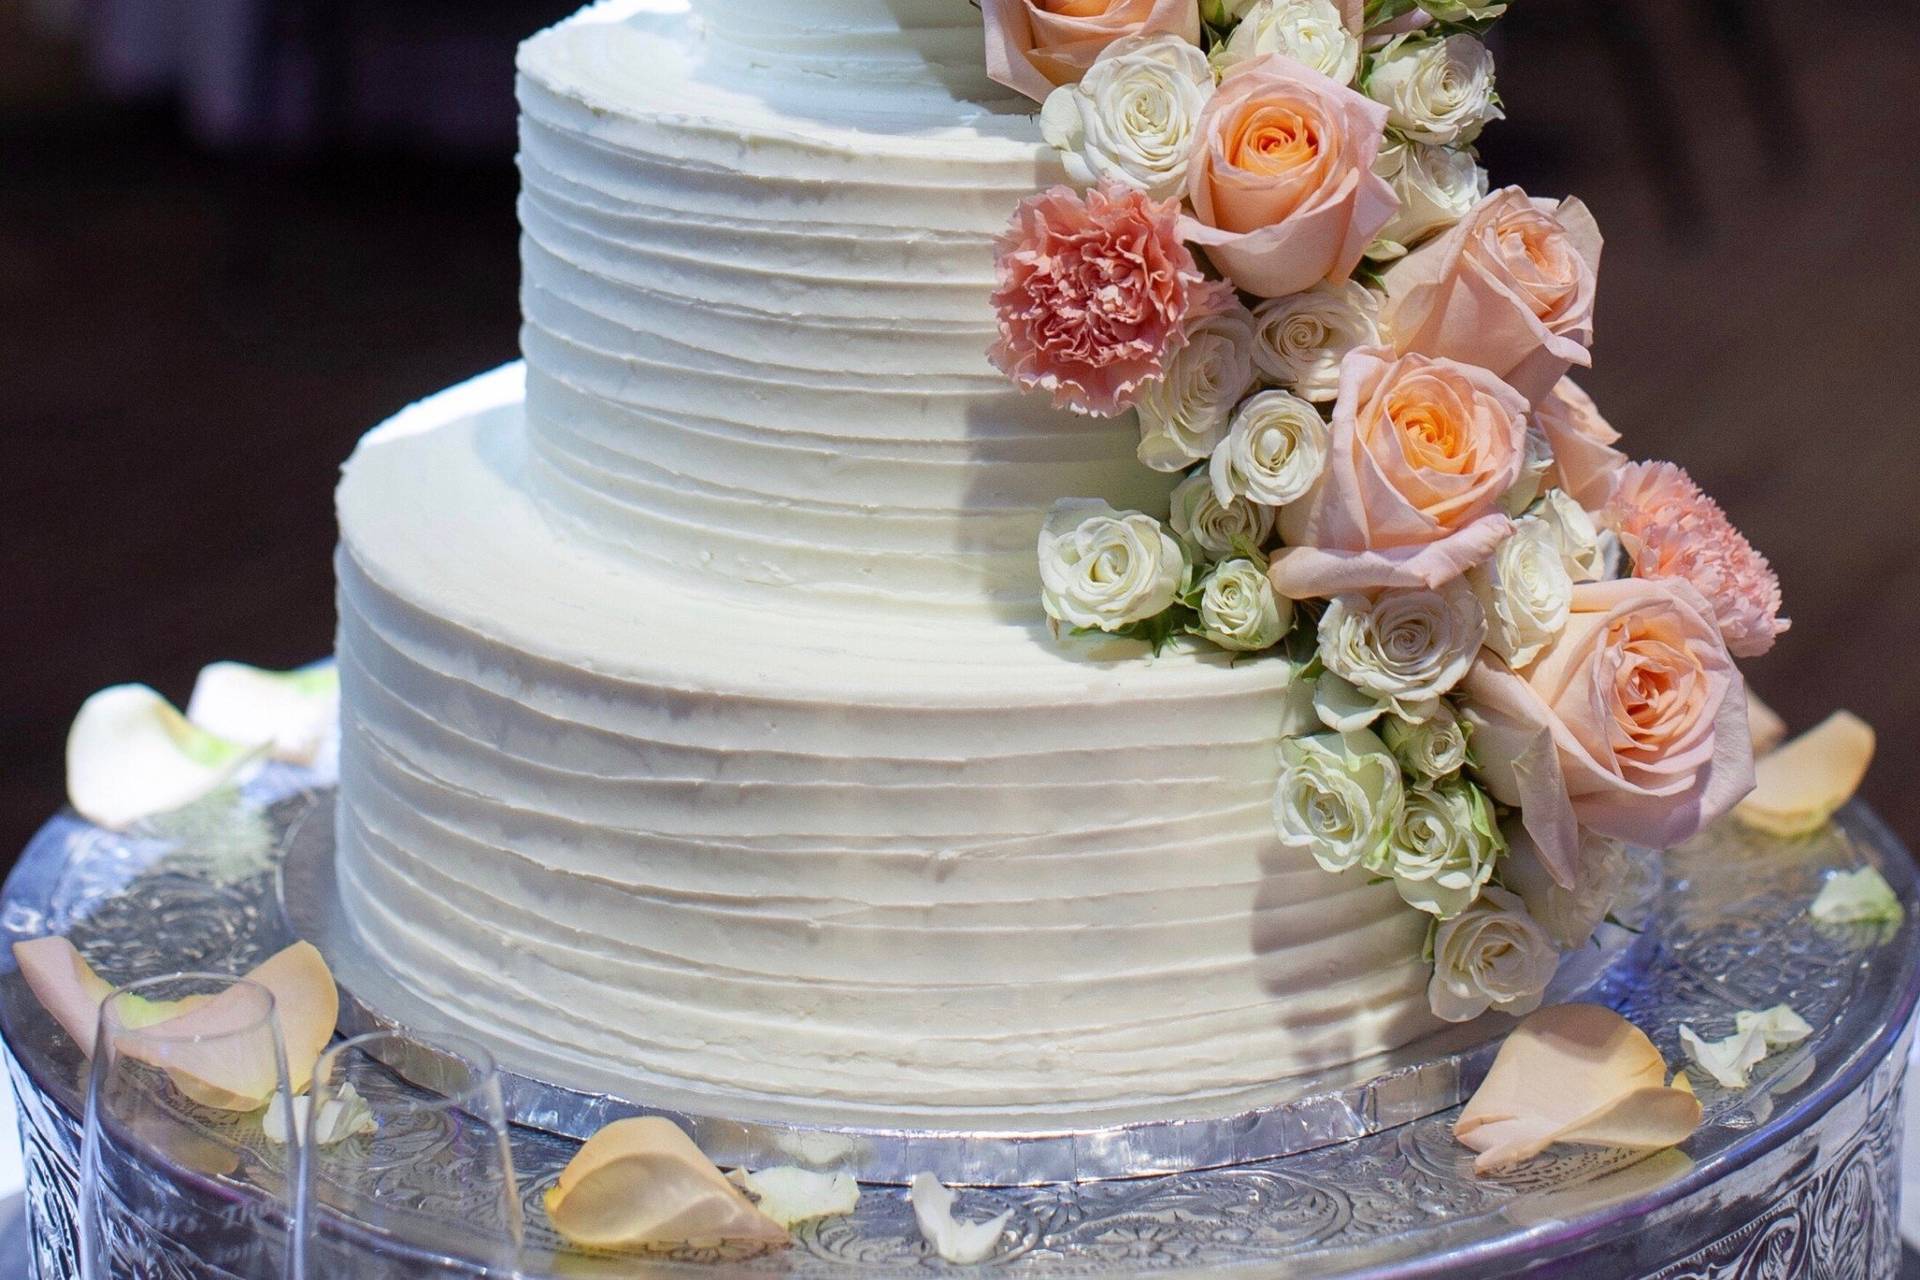 Gigi's Cupcakes - Savannah - Wedding Cake - Savannah, GA - WeddingWire